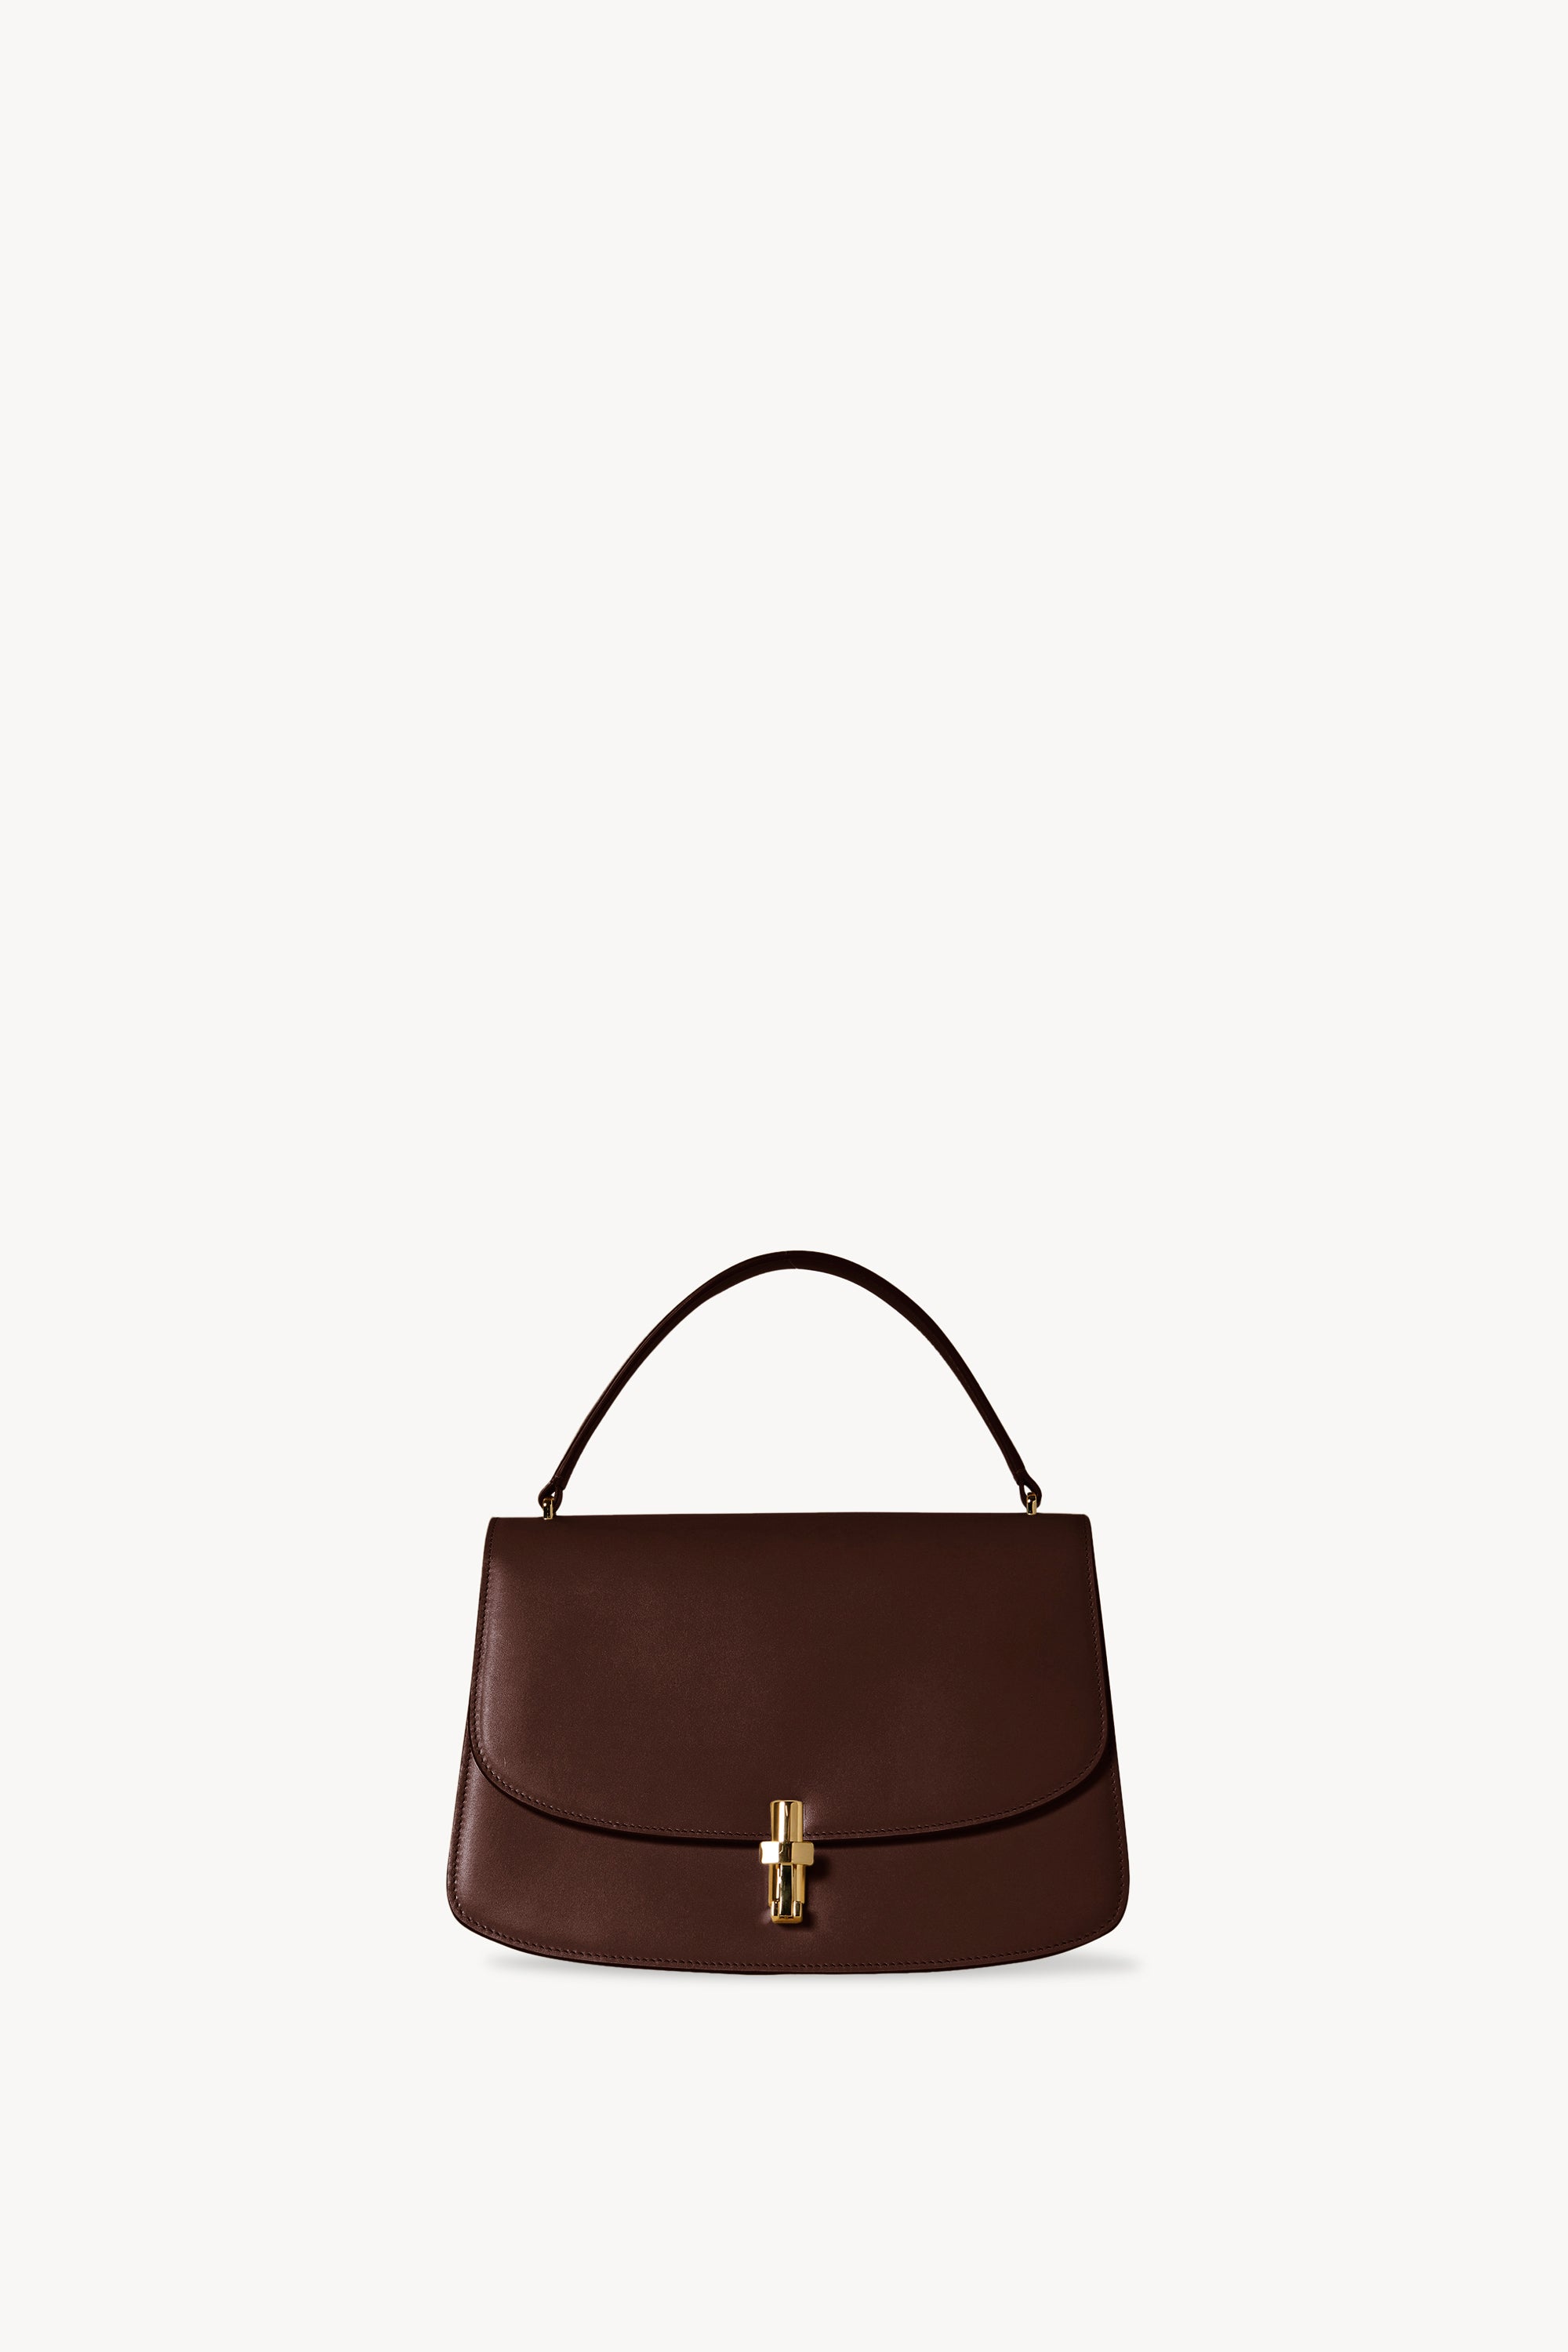 Cuyana Leather Handle Bag